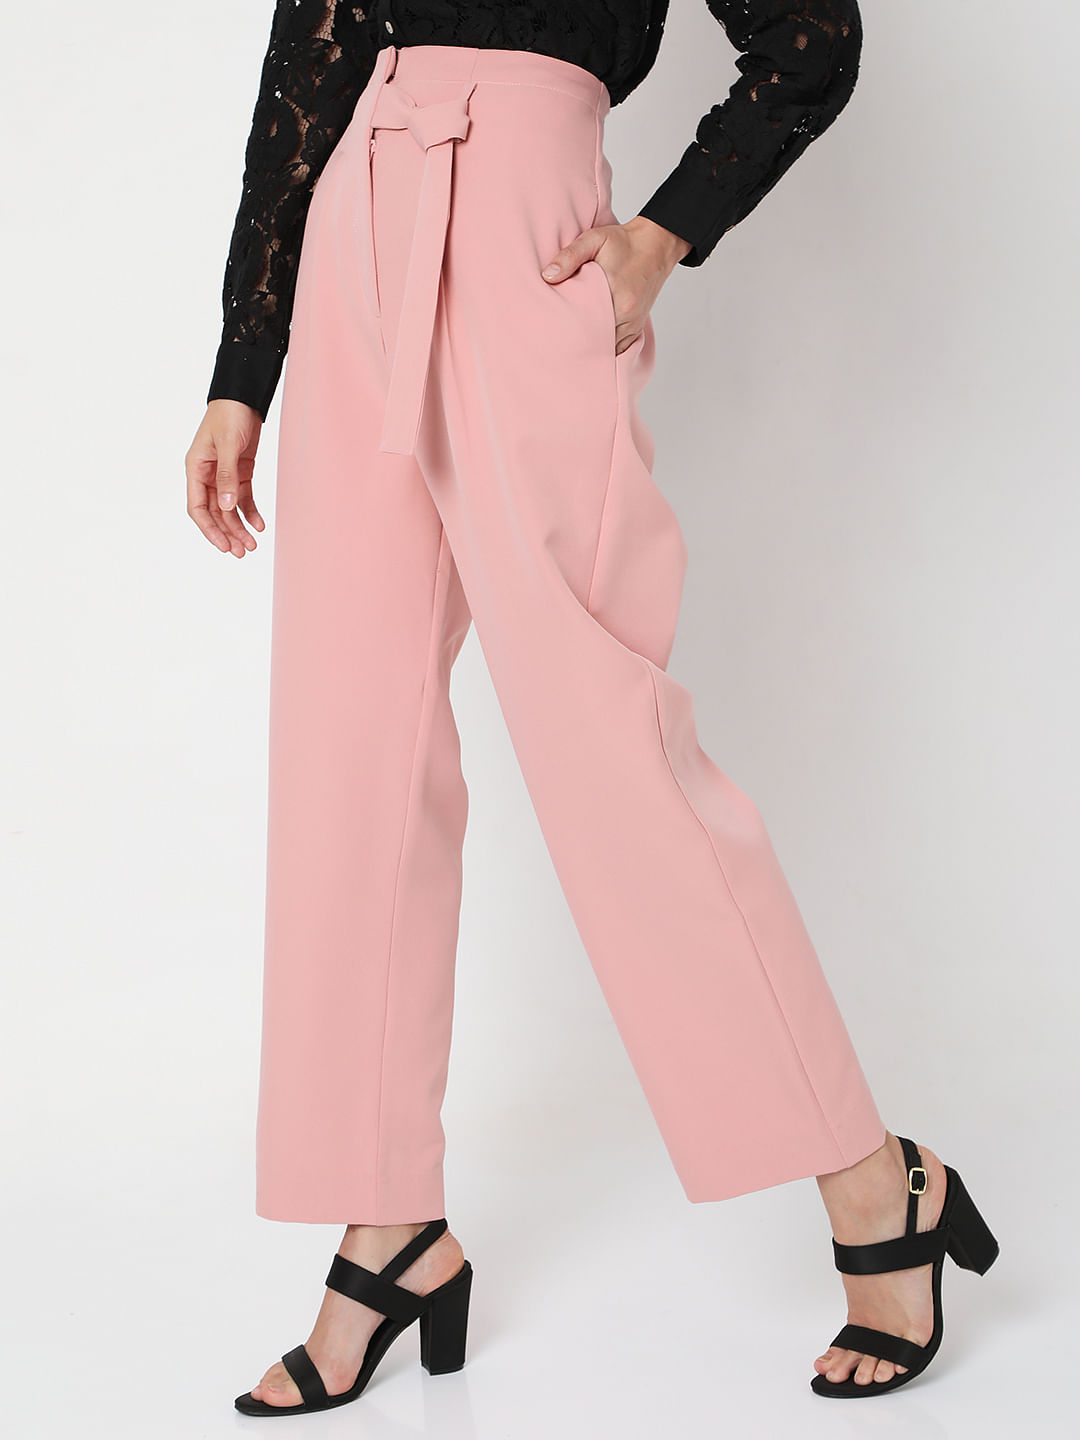 Buy KOTTY Women Regular Length Rose Pink Solid Trousers at Amazonin